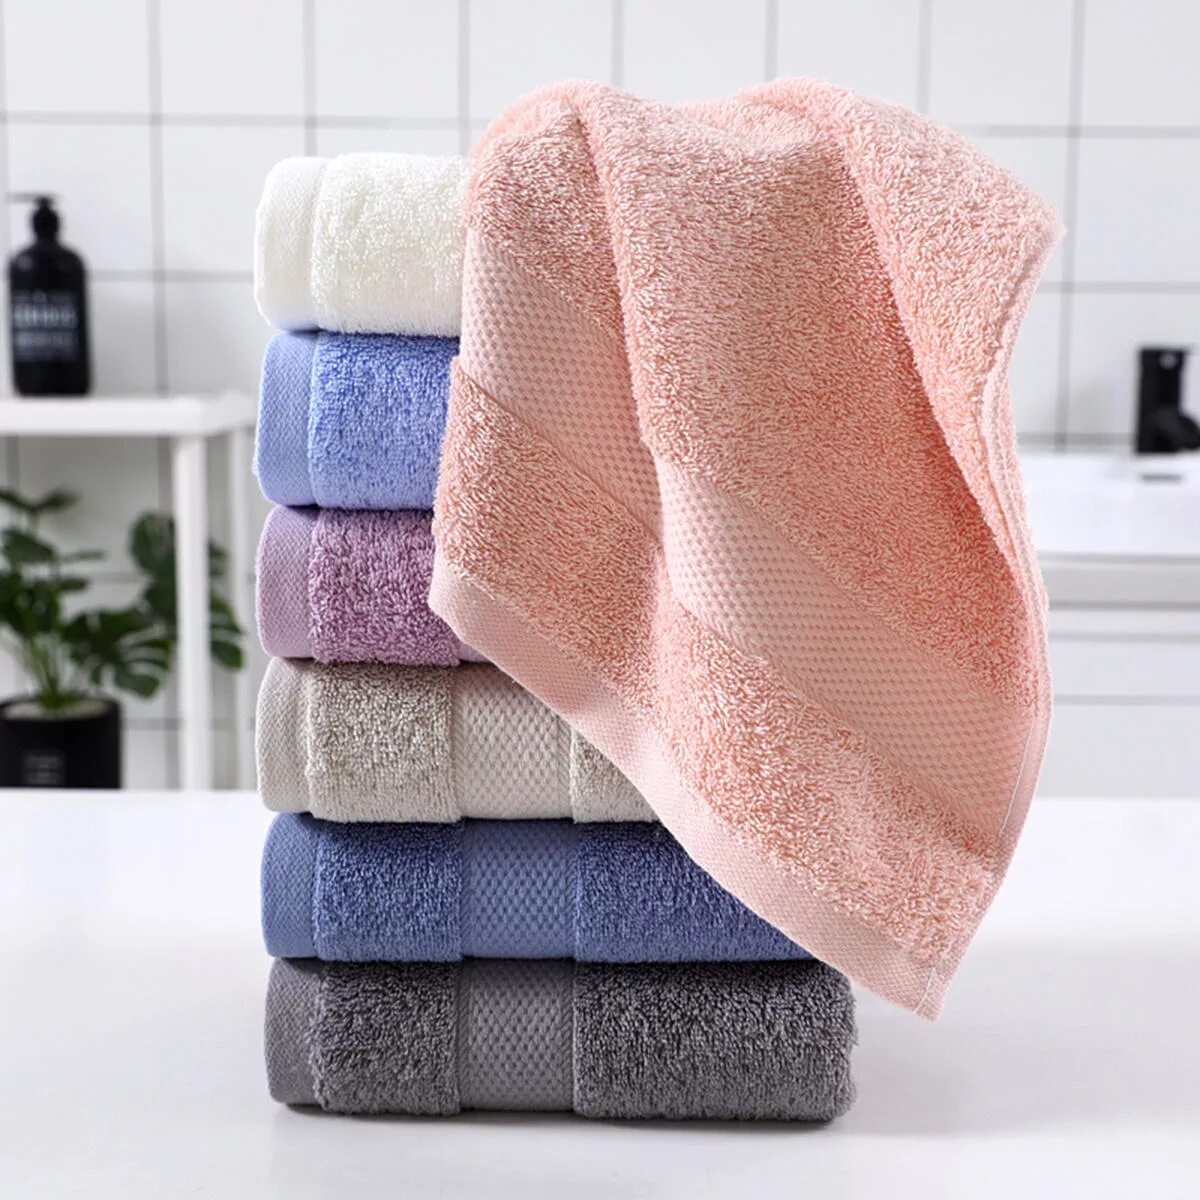 Полотенце уход. Cotton Soft Bath Towel. Havlu. Memory warm полотенце. Edel Soft Towels.